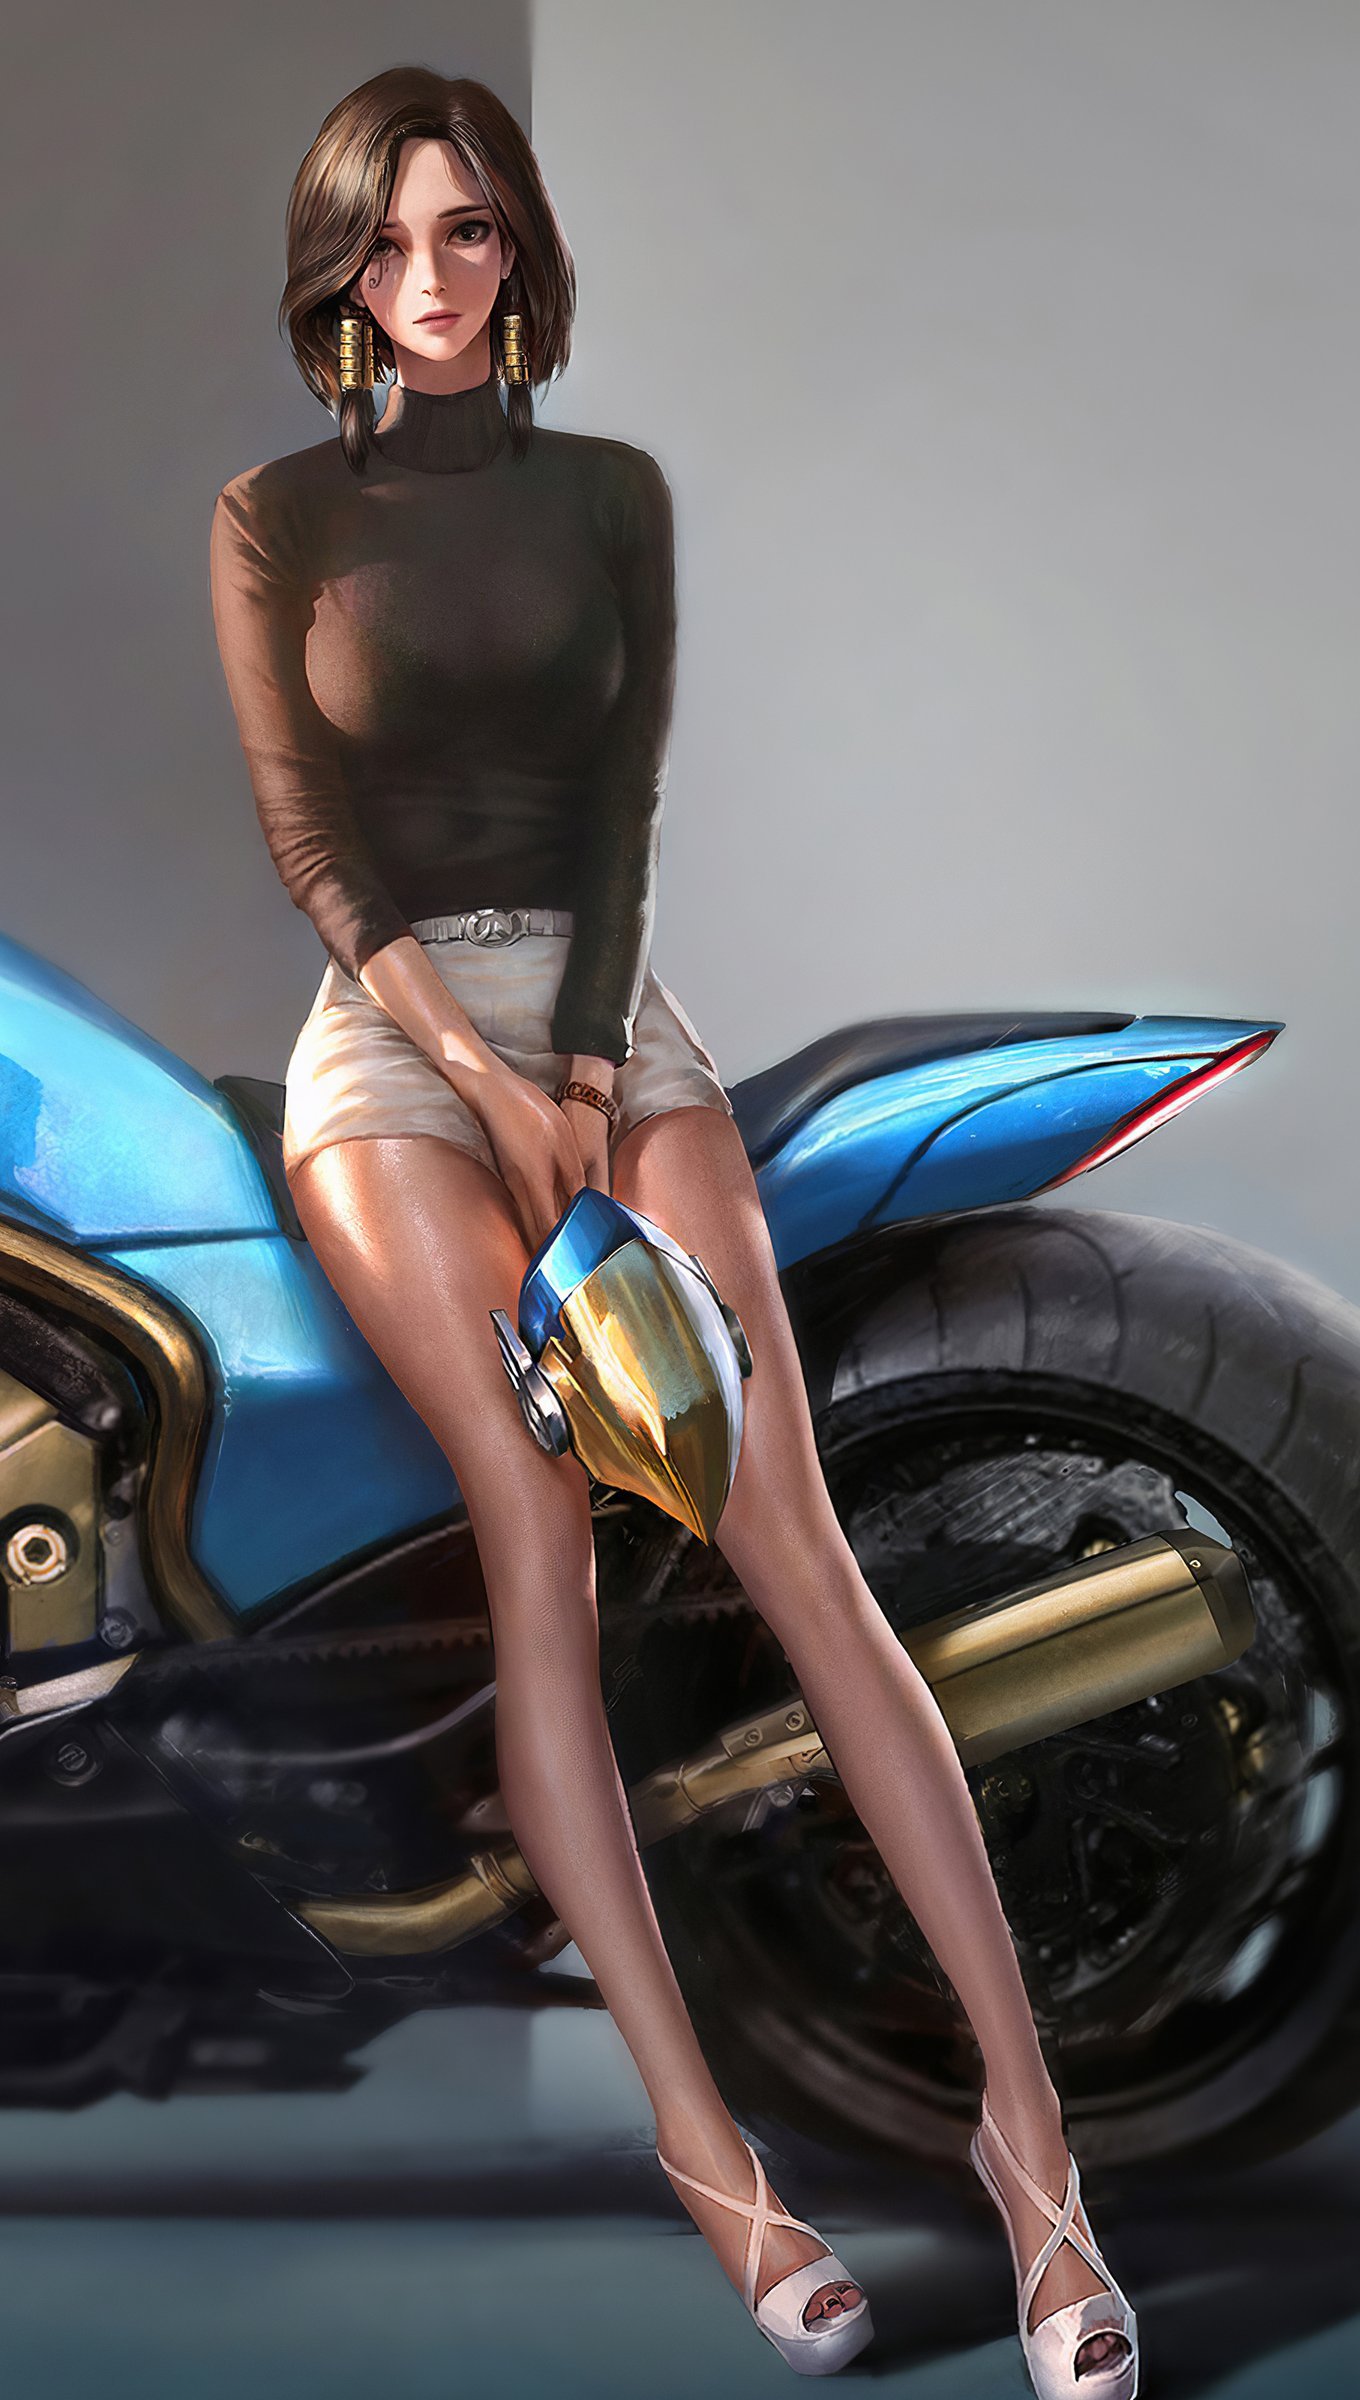 Wallpaper Girl in motocycle illustration Vertical